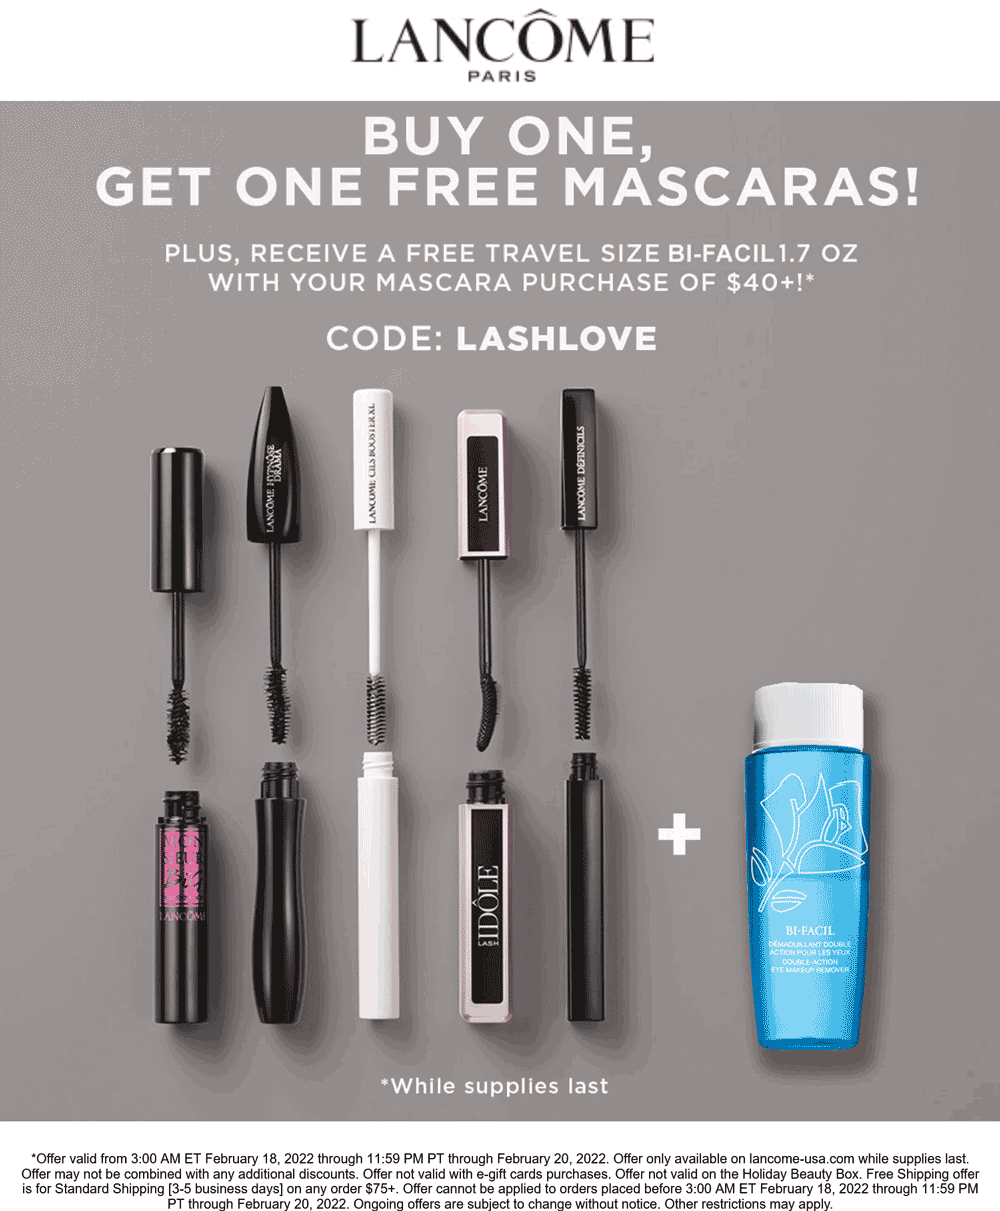 Lancome stores Coupon  Second mascara free at Lancome via promo code LASHLOVE #lancome 